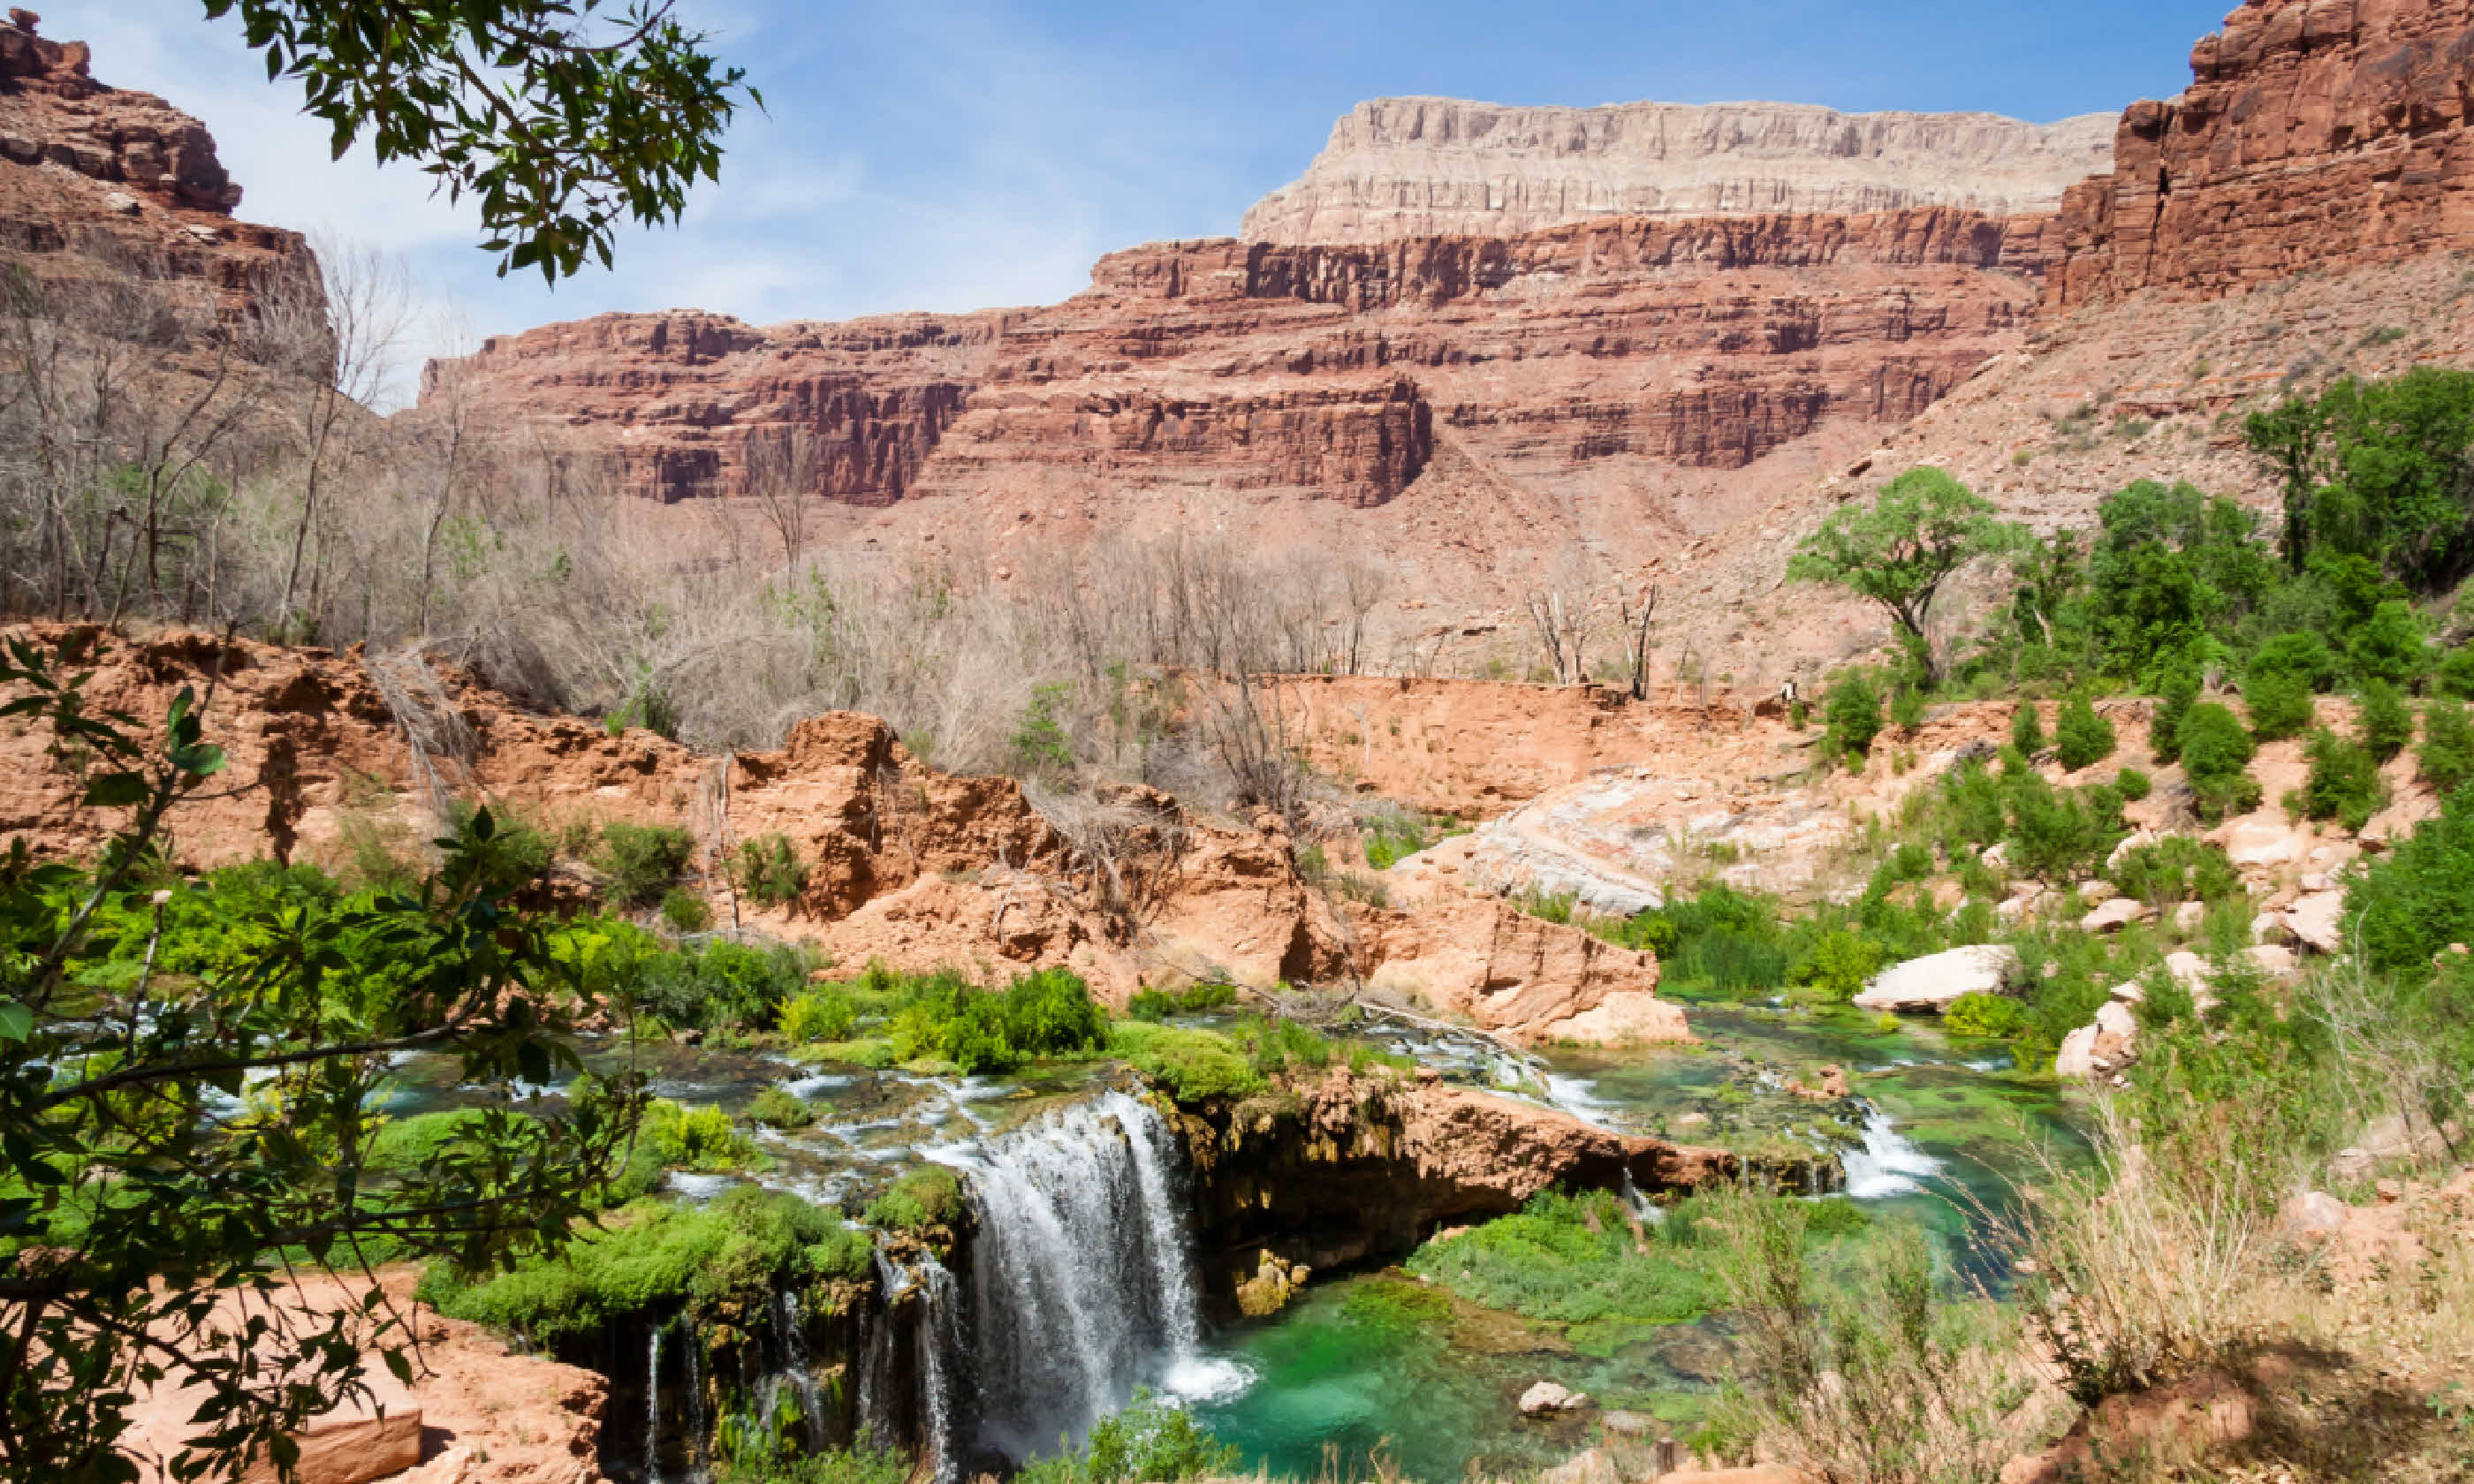 Near village of Supai, Grand Canyon (Shutterstock)